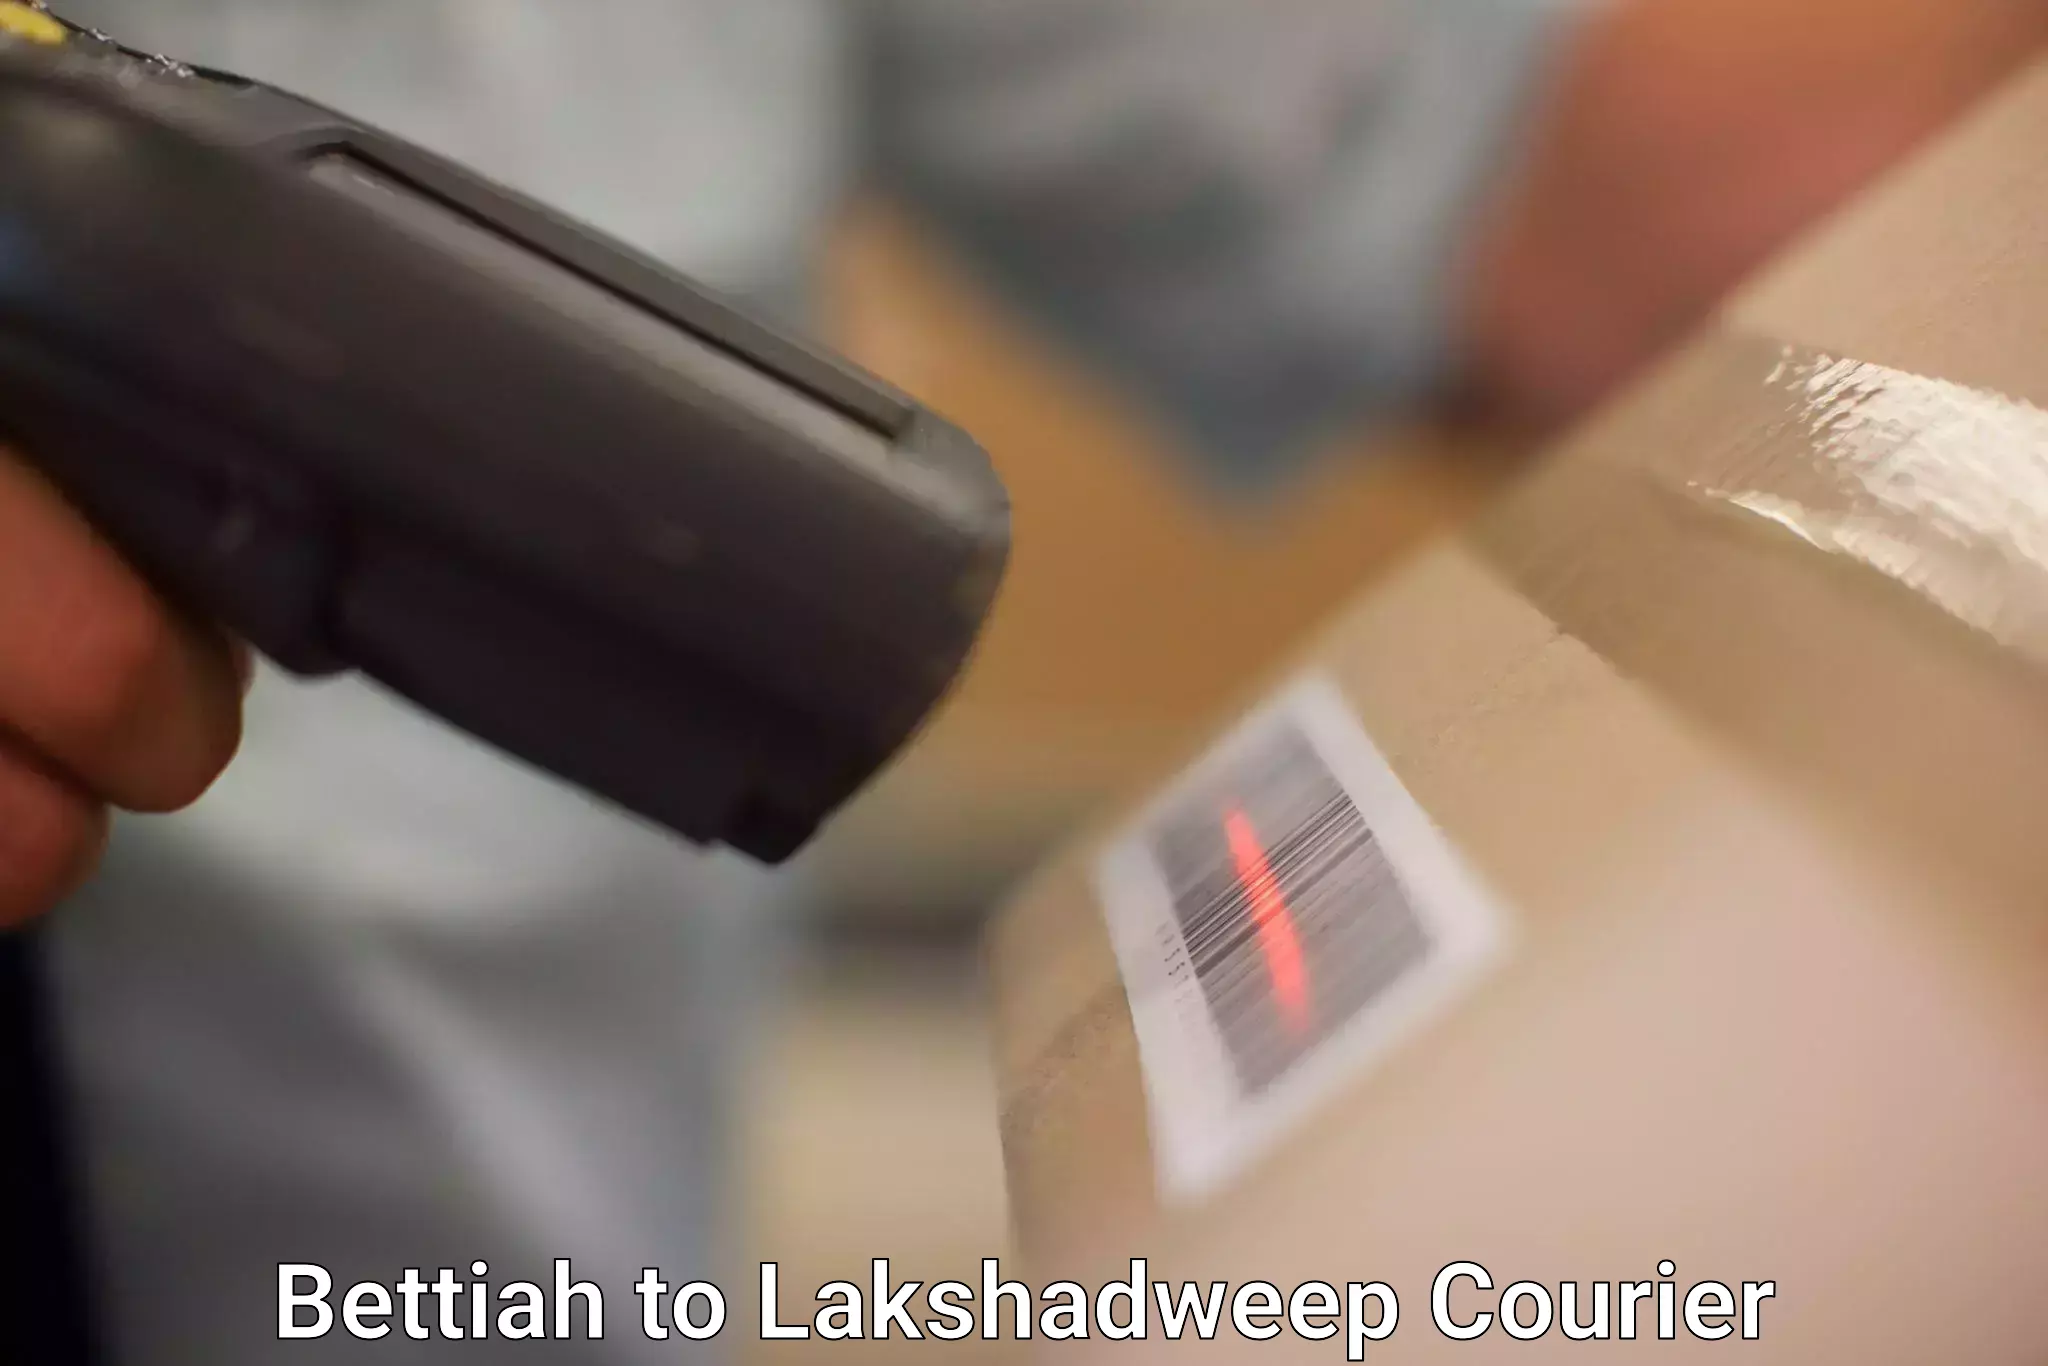 Courier service partnerships Bettiah to Lakshadweep